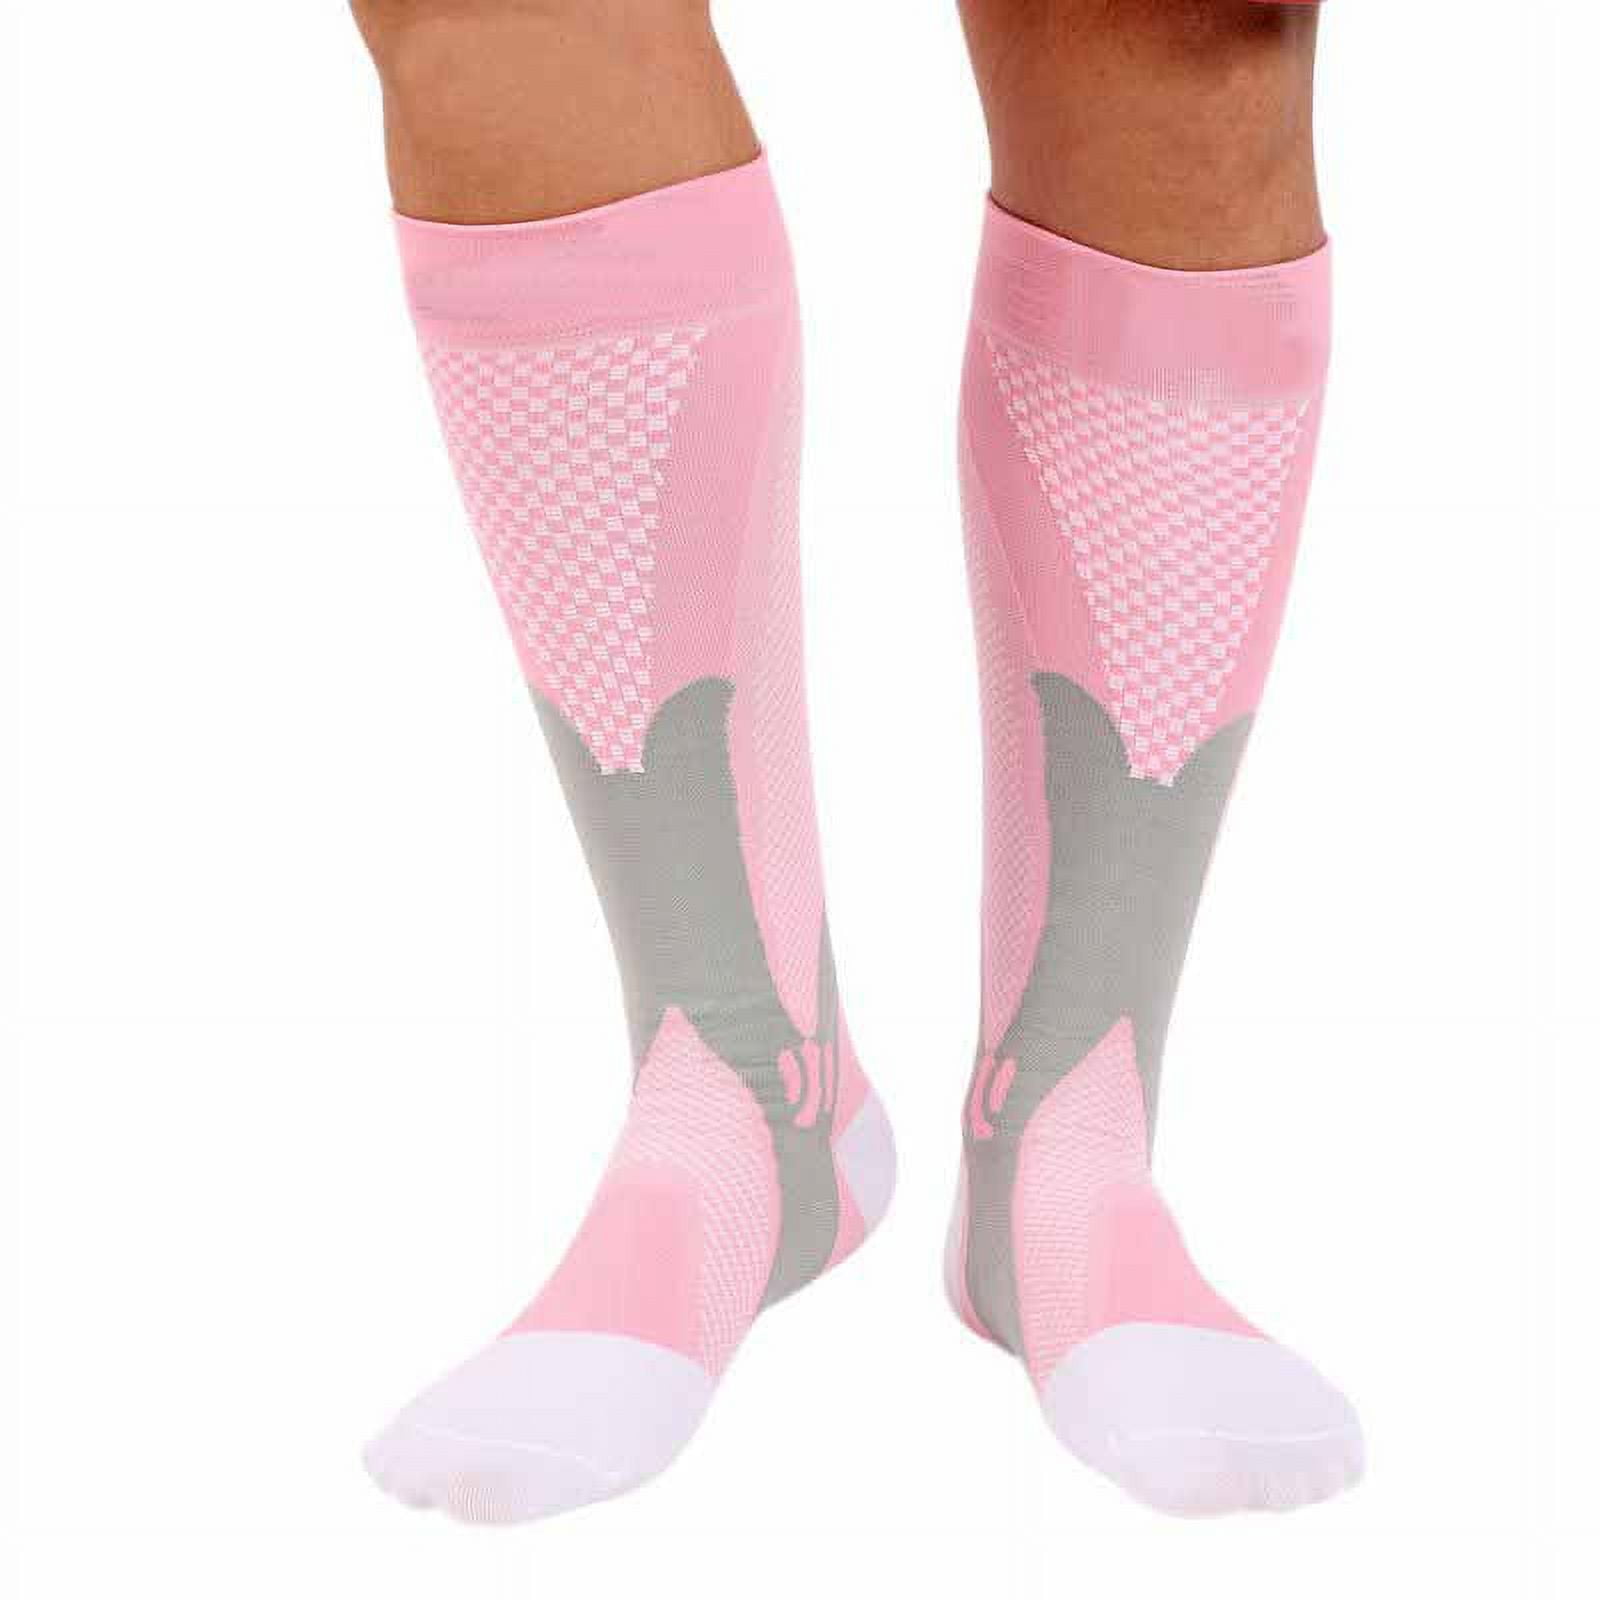 20-30 mmHg Compression Socks for Men & Women,Athletic Fit 